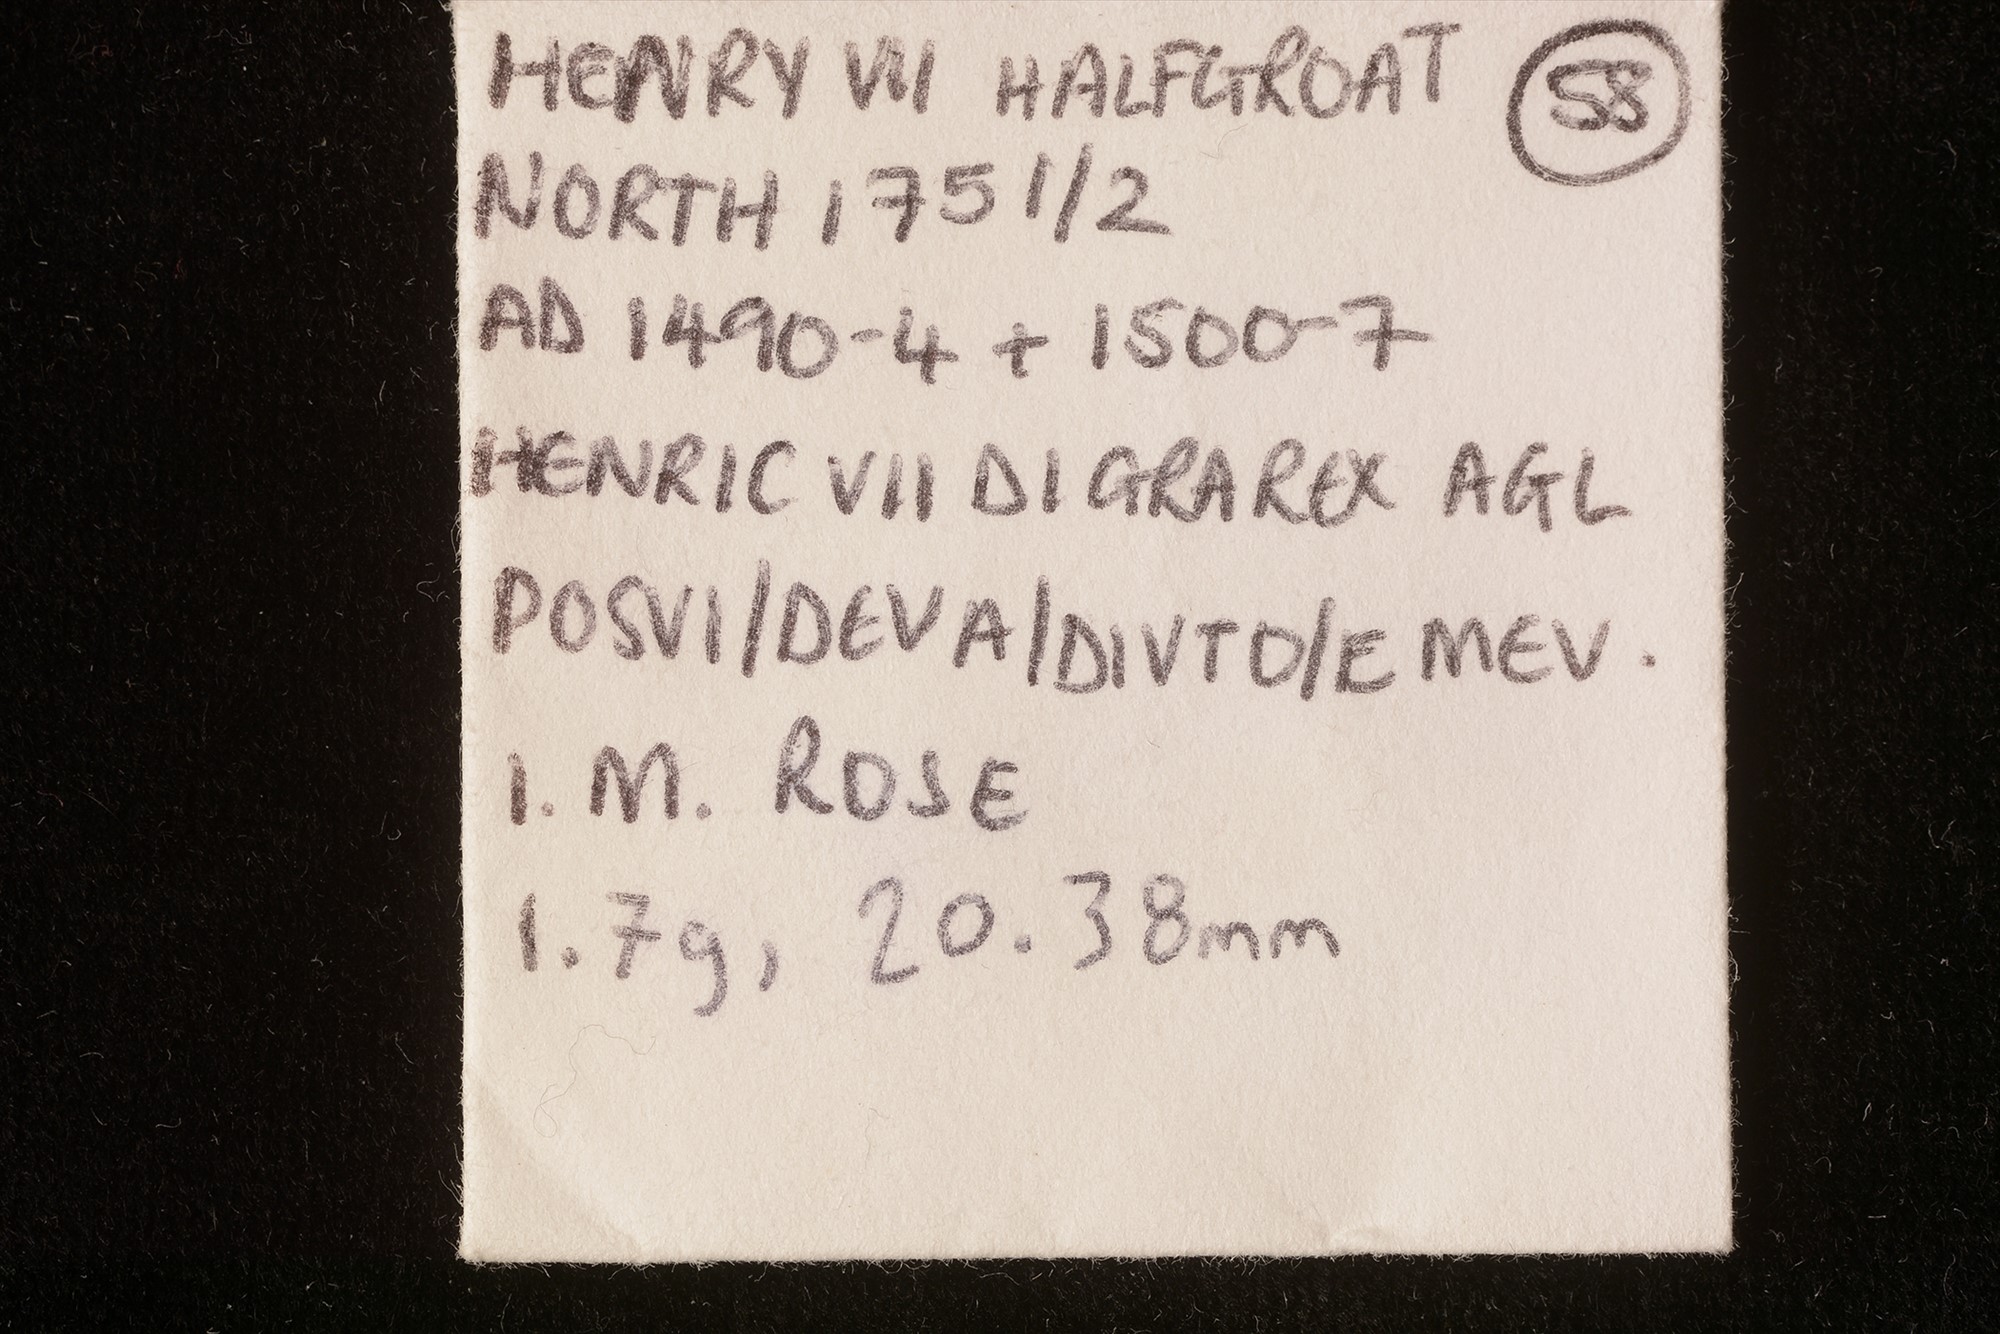 Henry VII halfgroat - Image 3 of 3